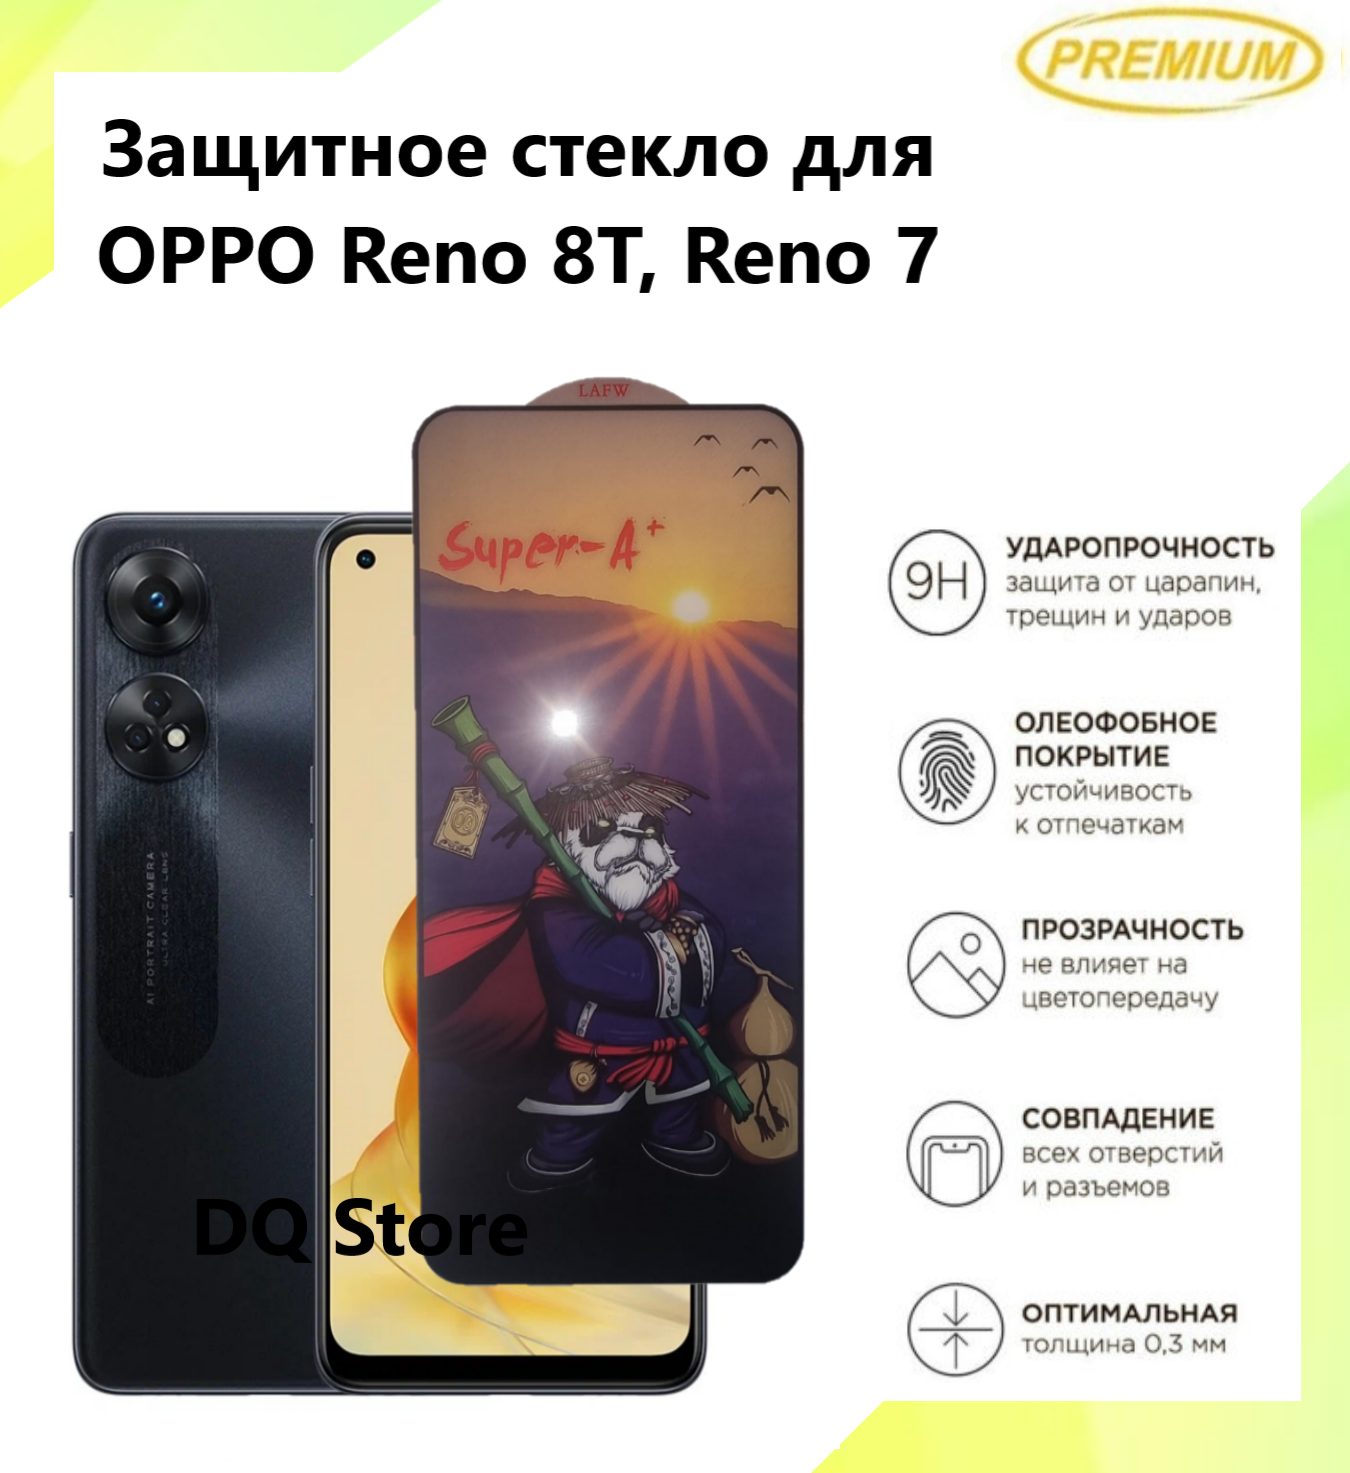 Защитное стекло на OPPO Reno 8T / OPPO Reno 7 . Полноэкранное защитное стекло с олеофобным покрытием Premium